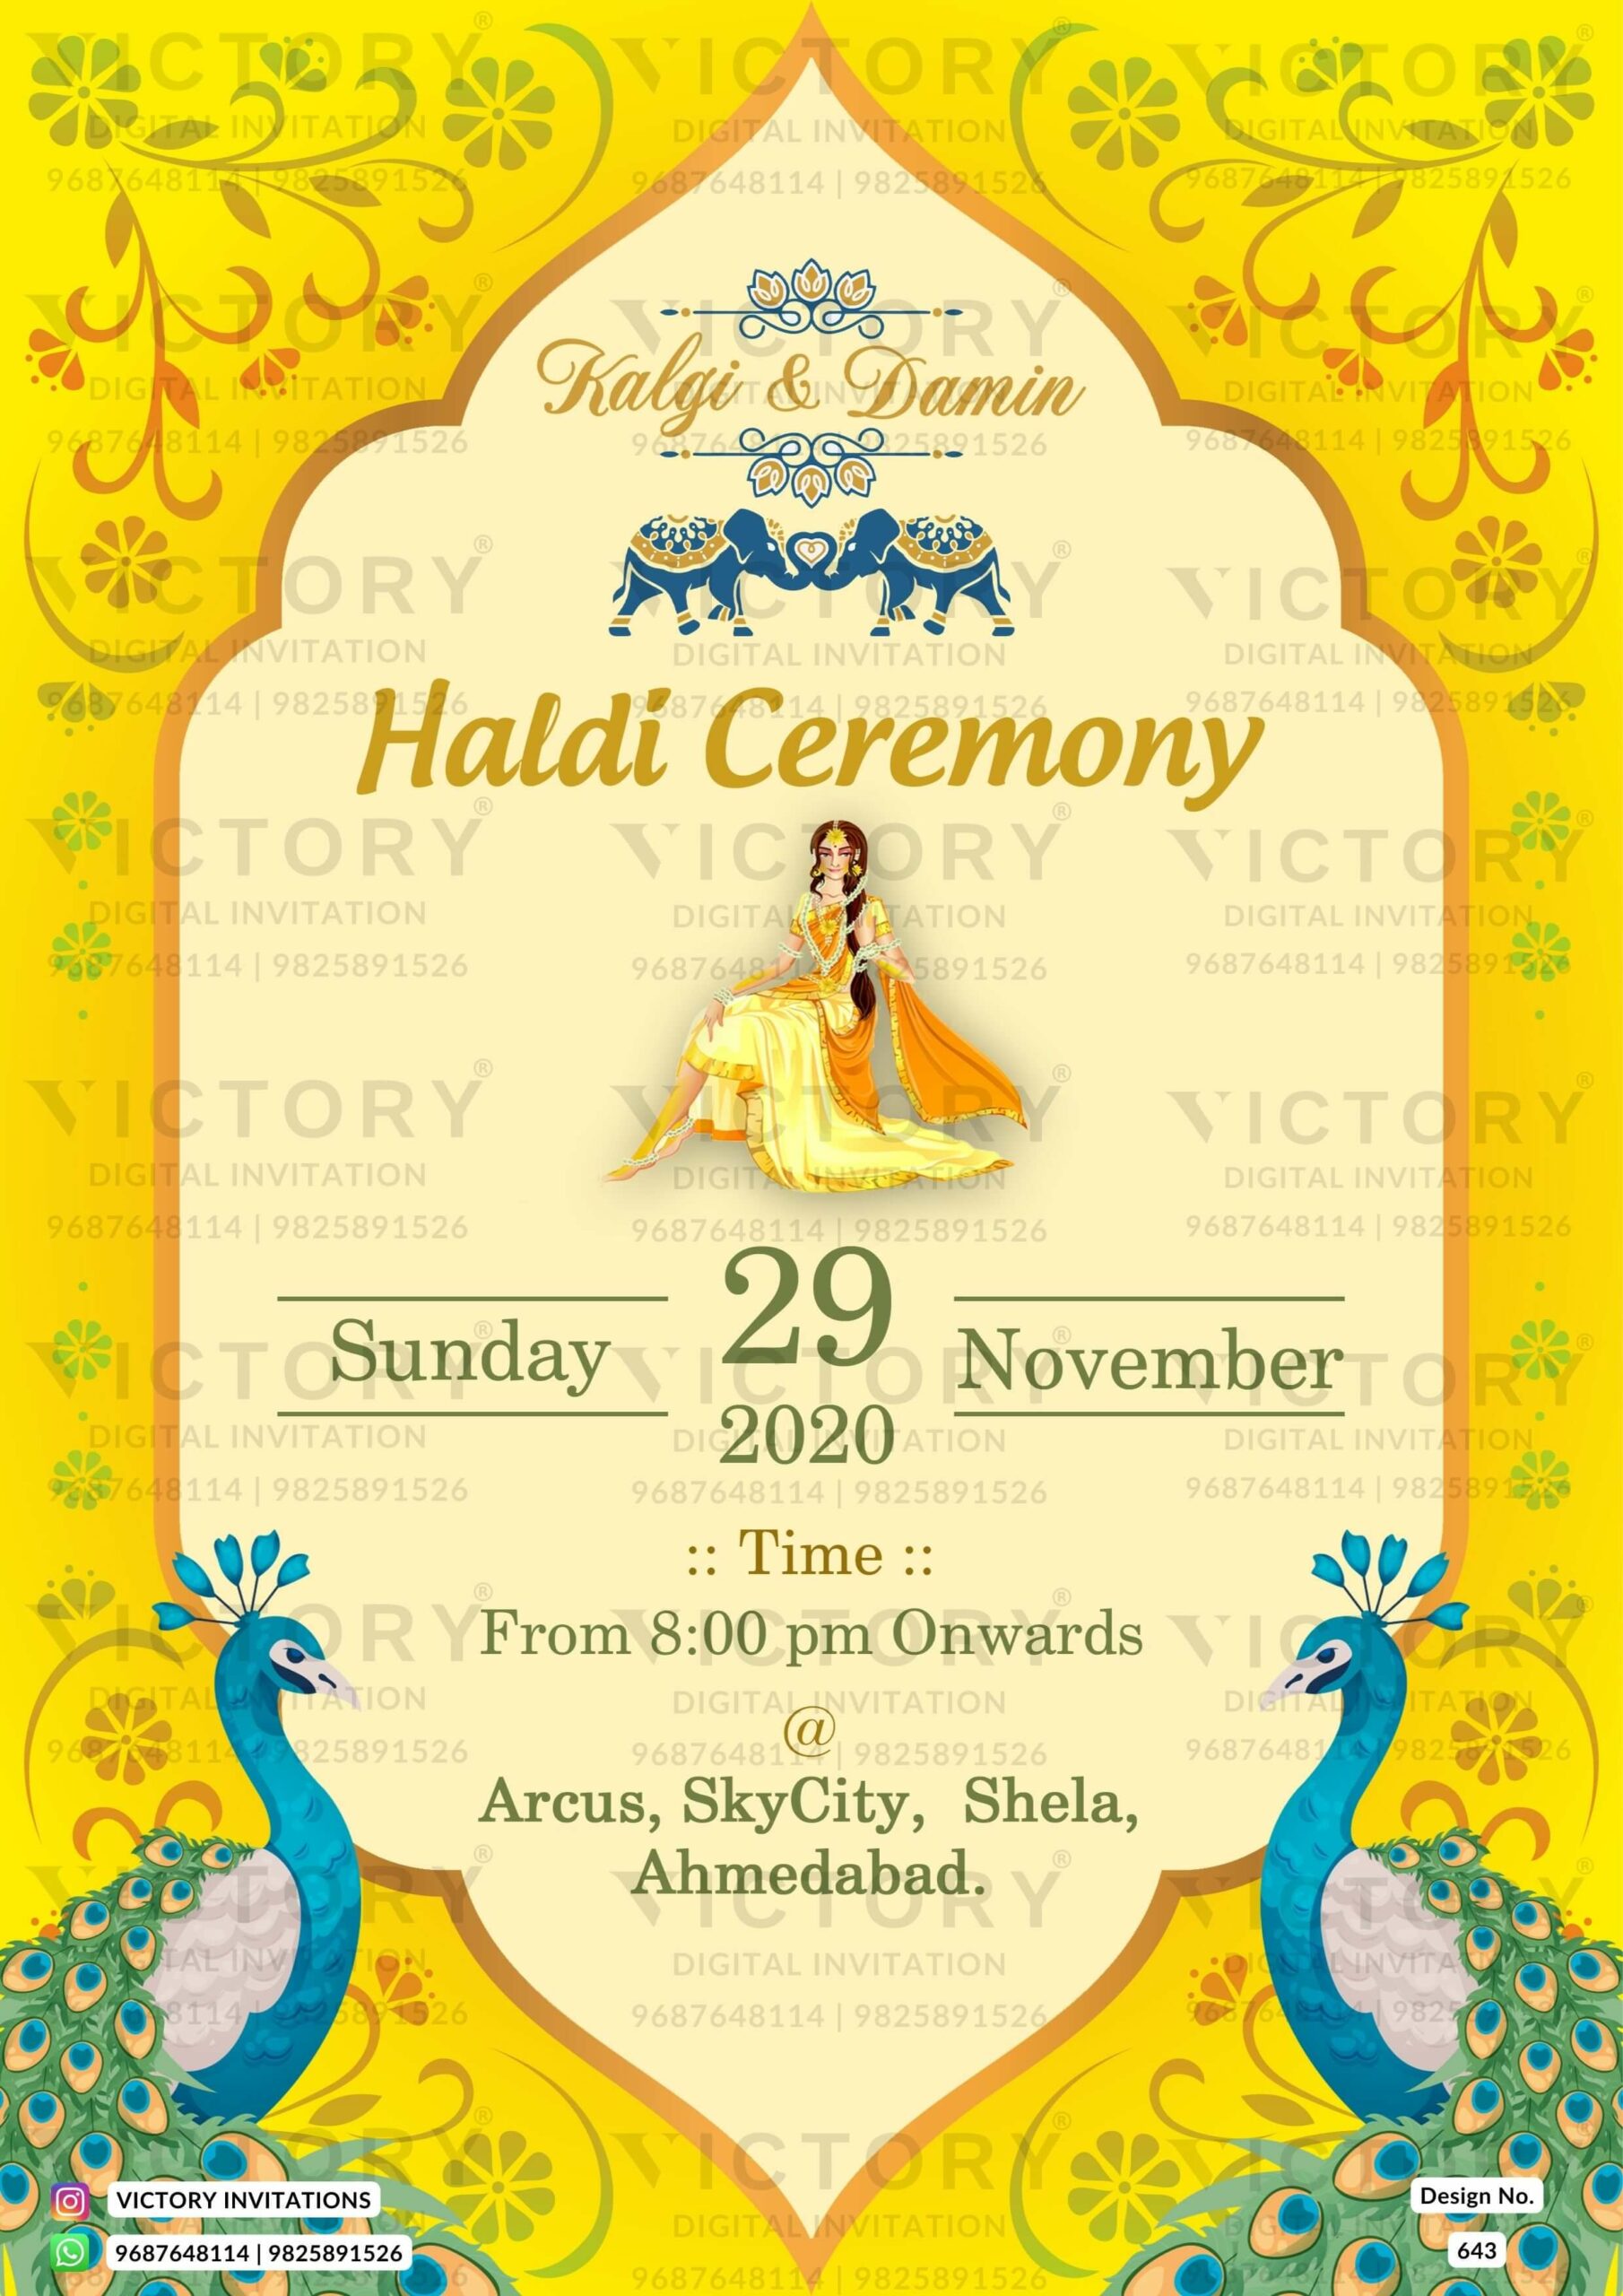 haldi ceremony digital invitation card design number 643